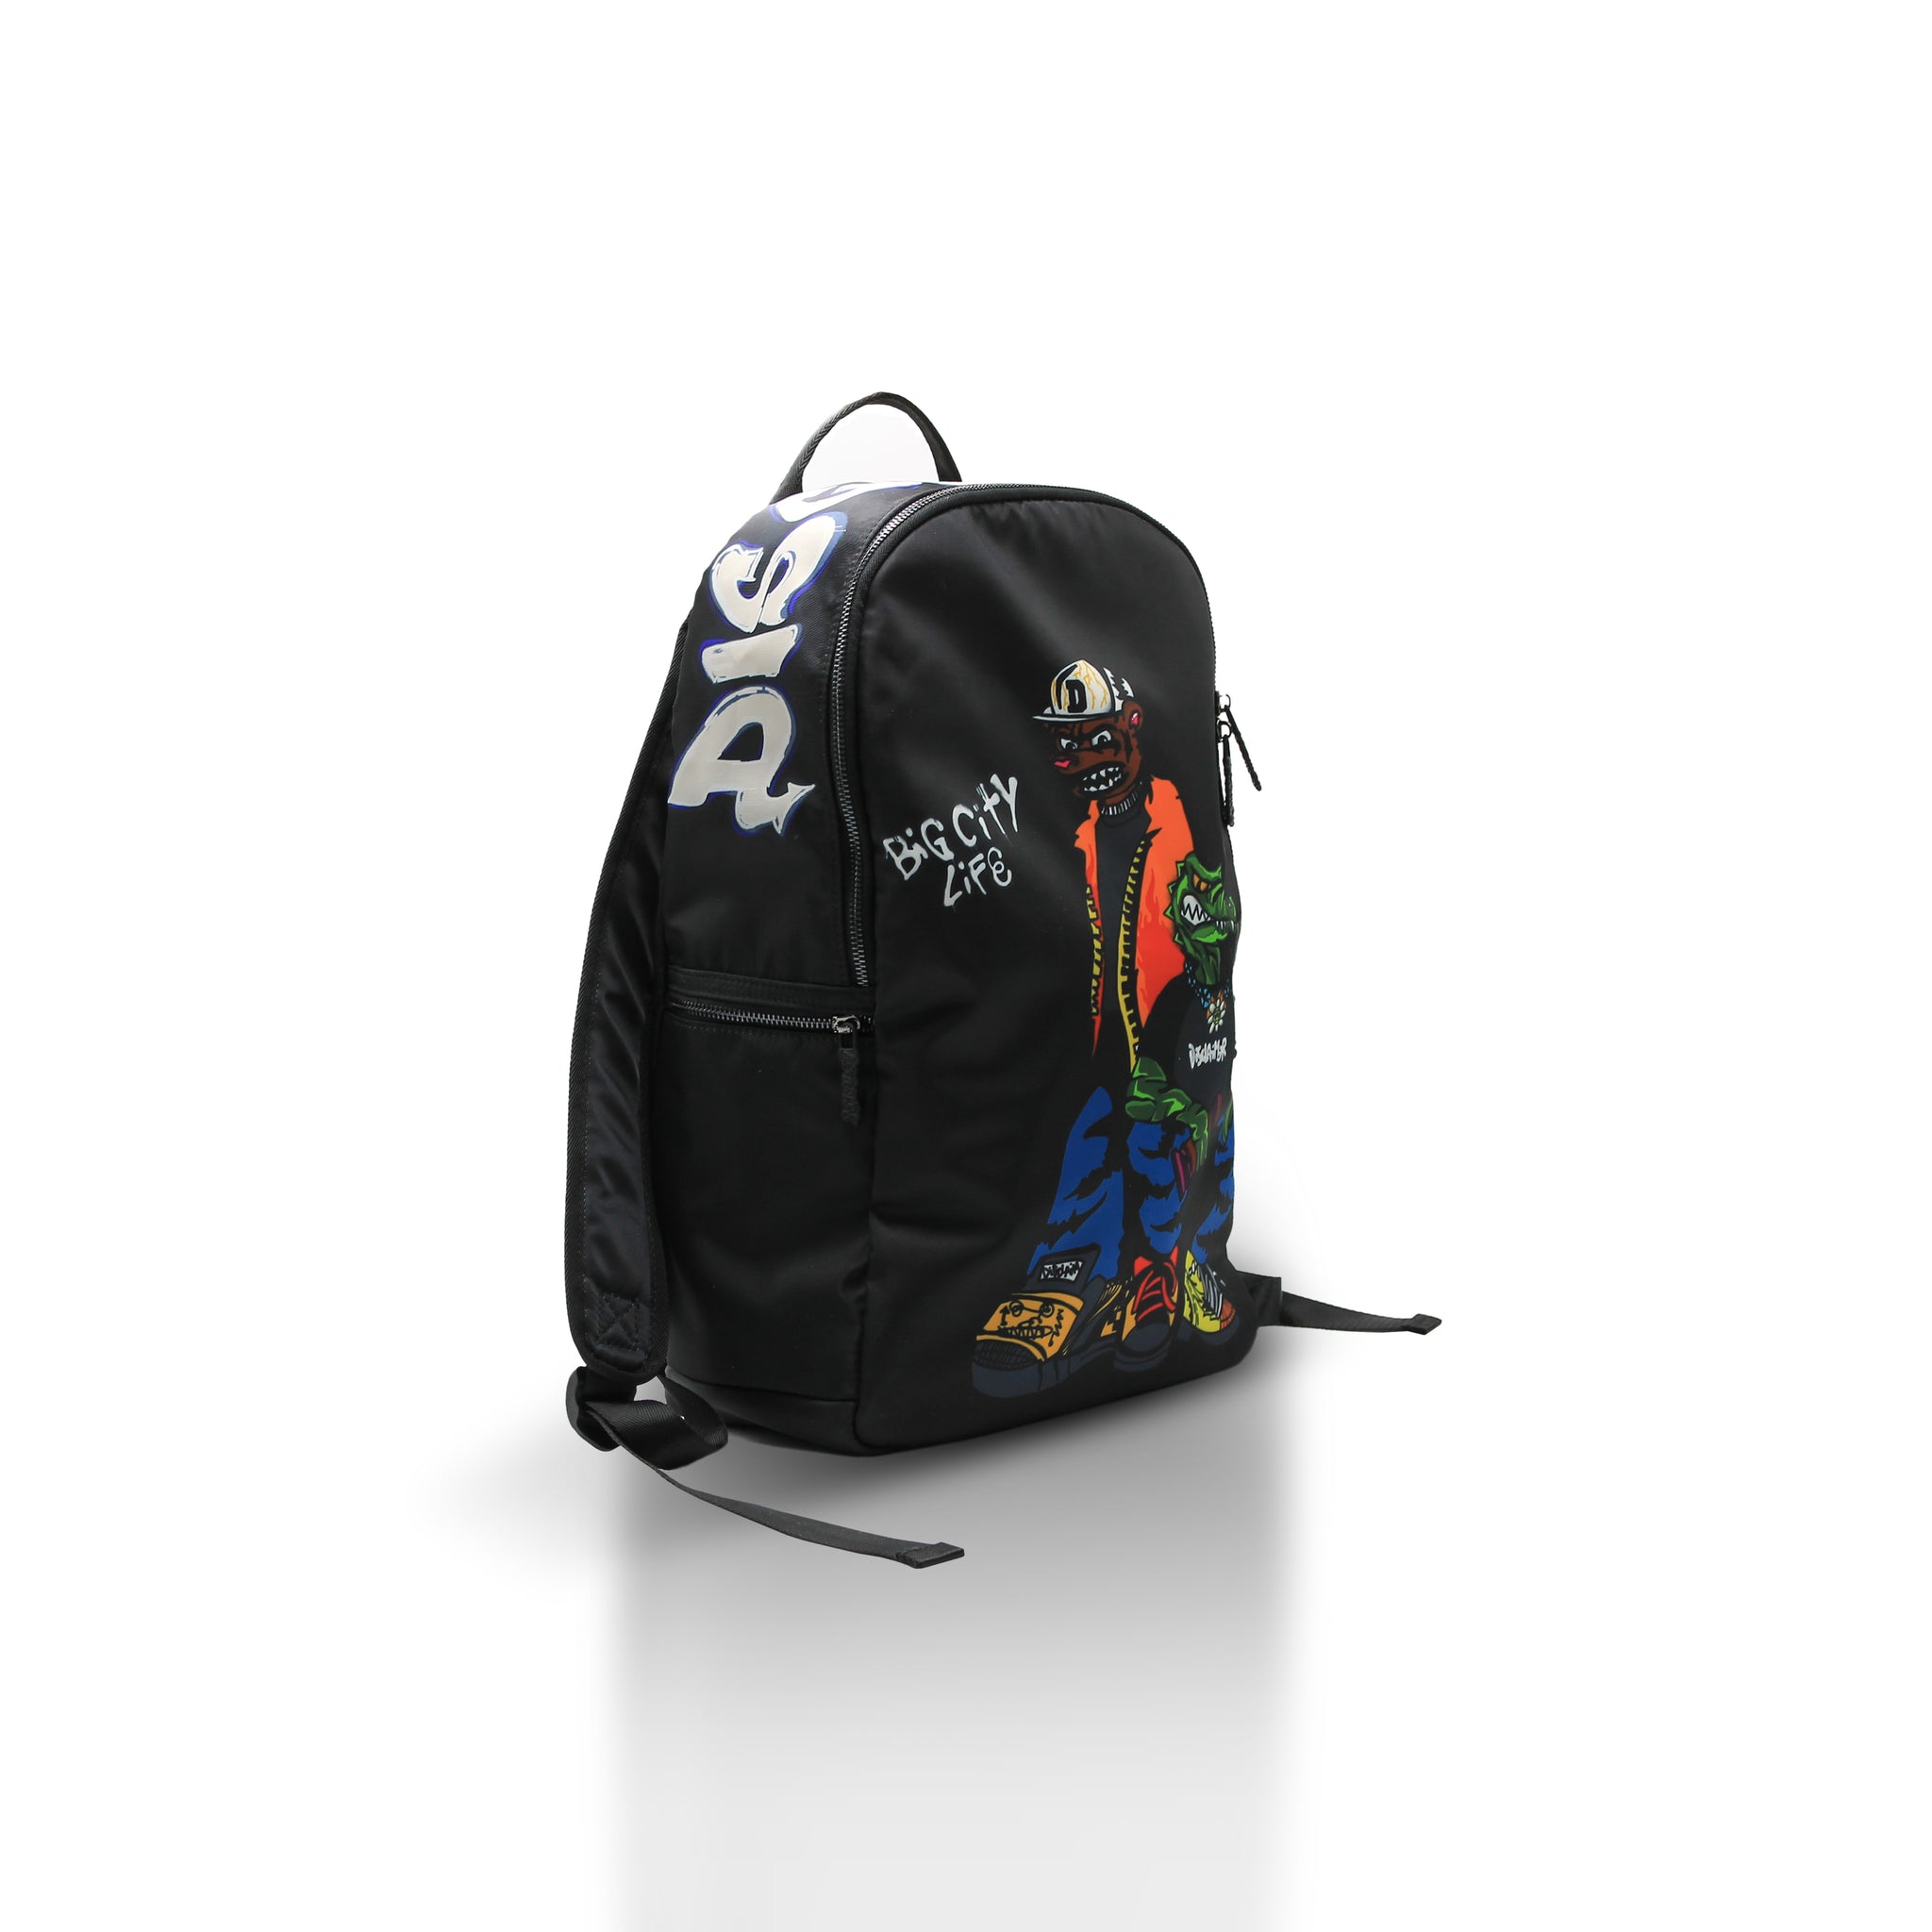 Multicolor nylon backpack